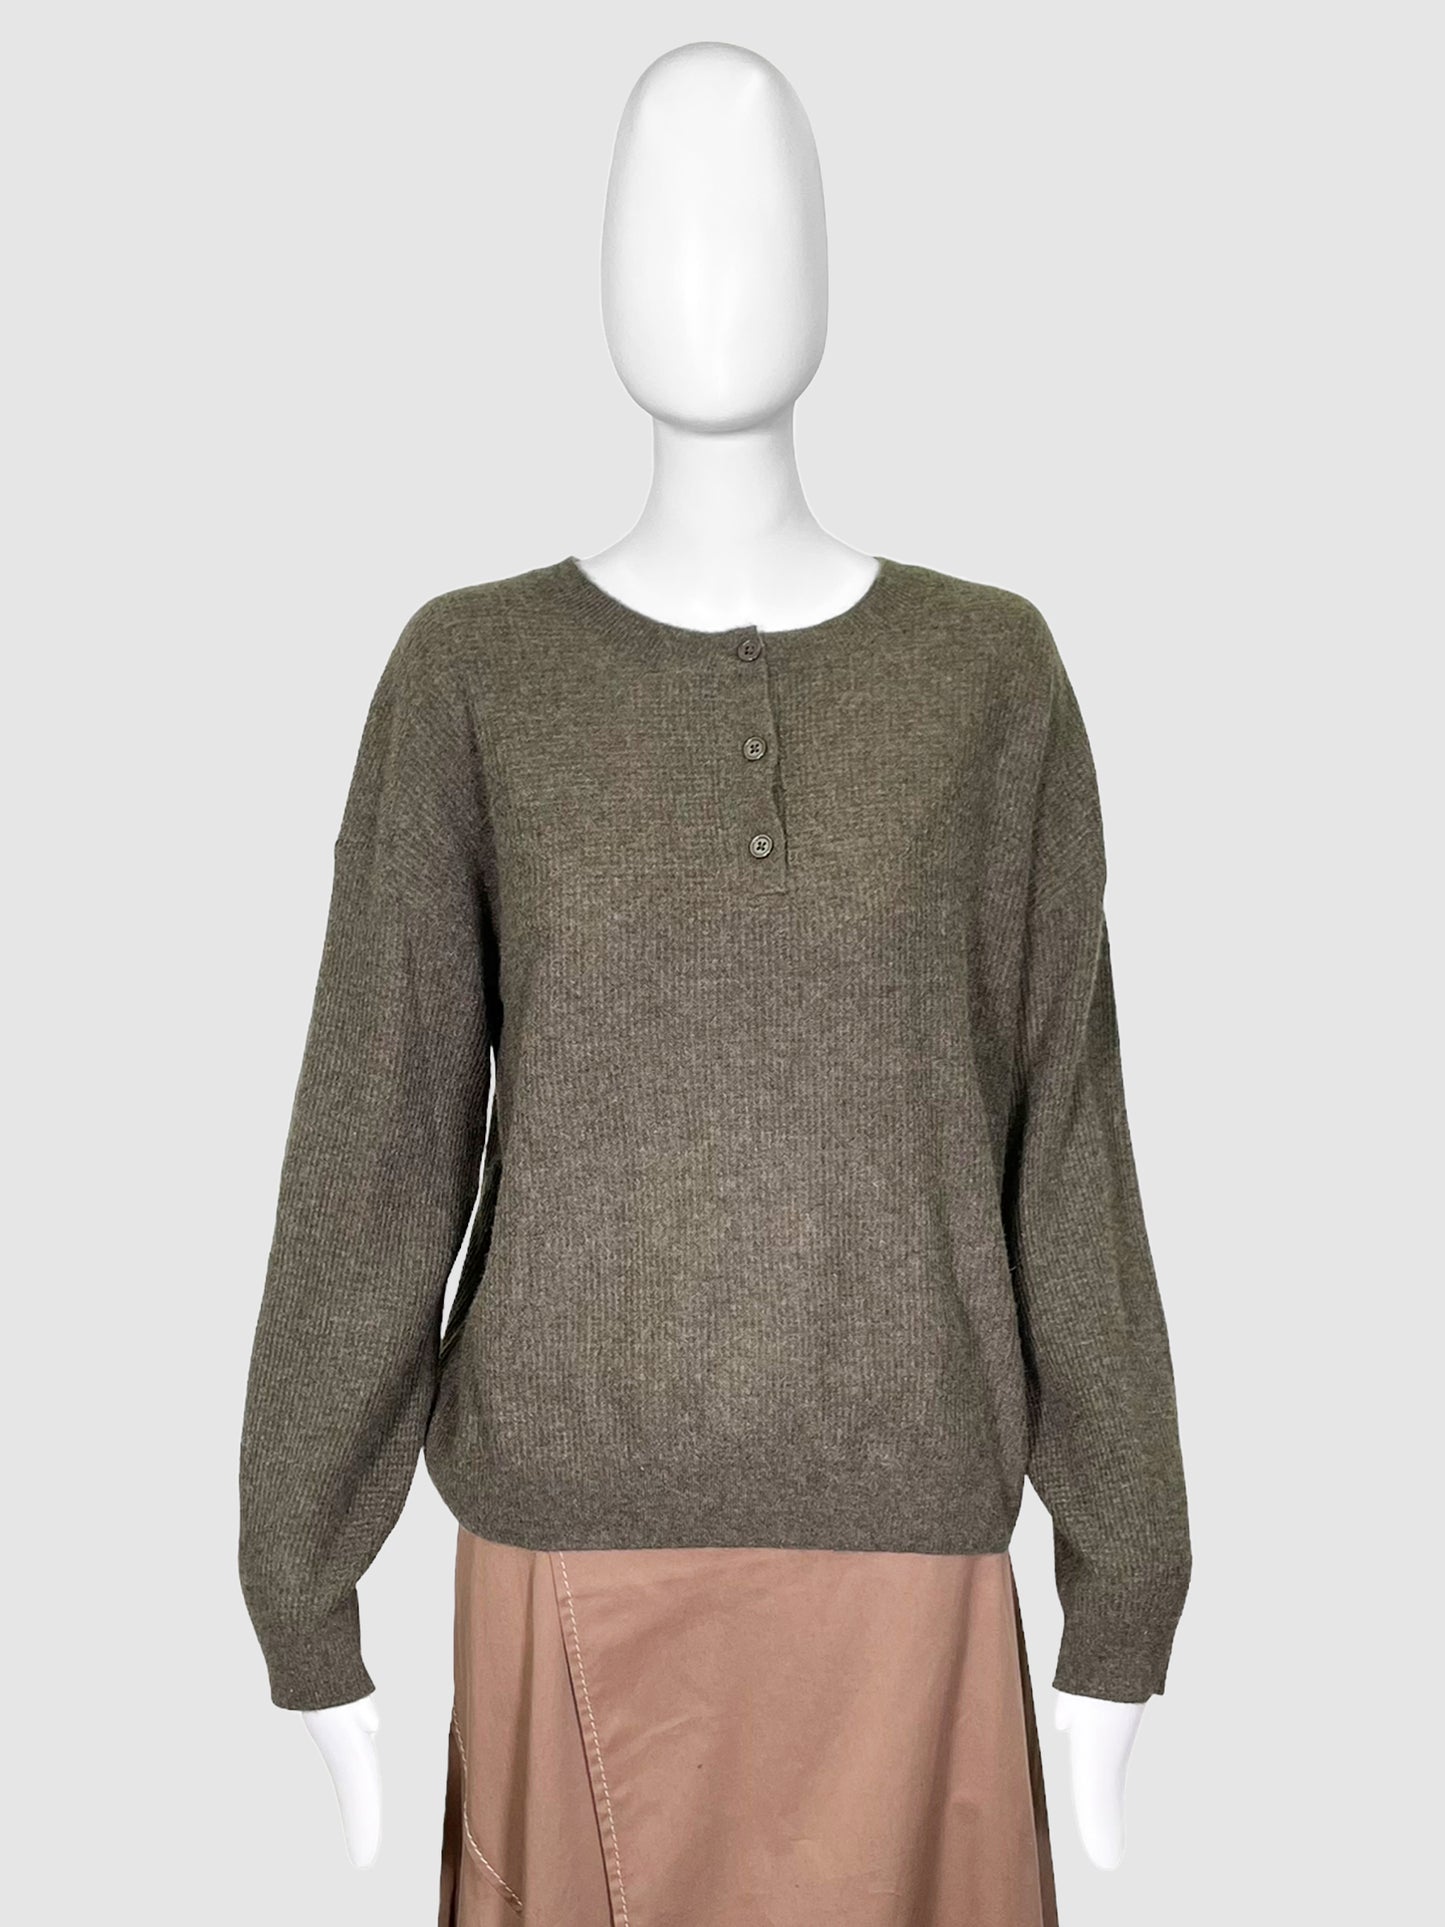 Magaschoni Cashmere Sweater - Size M